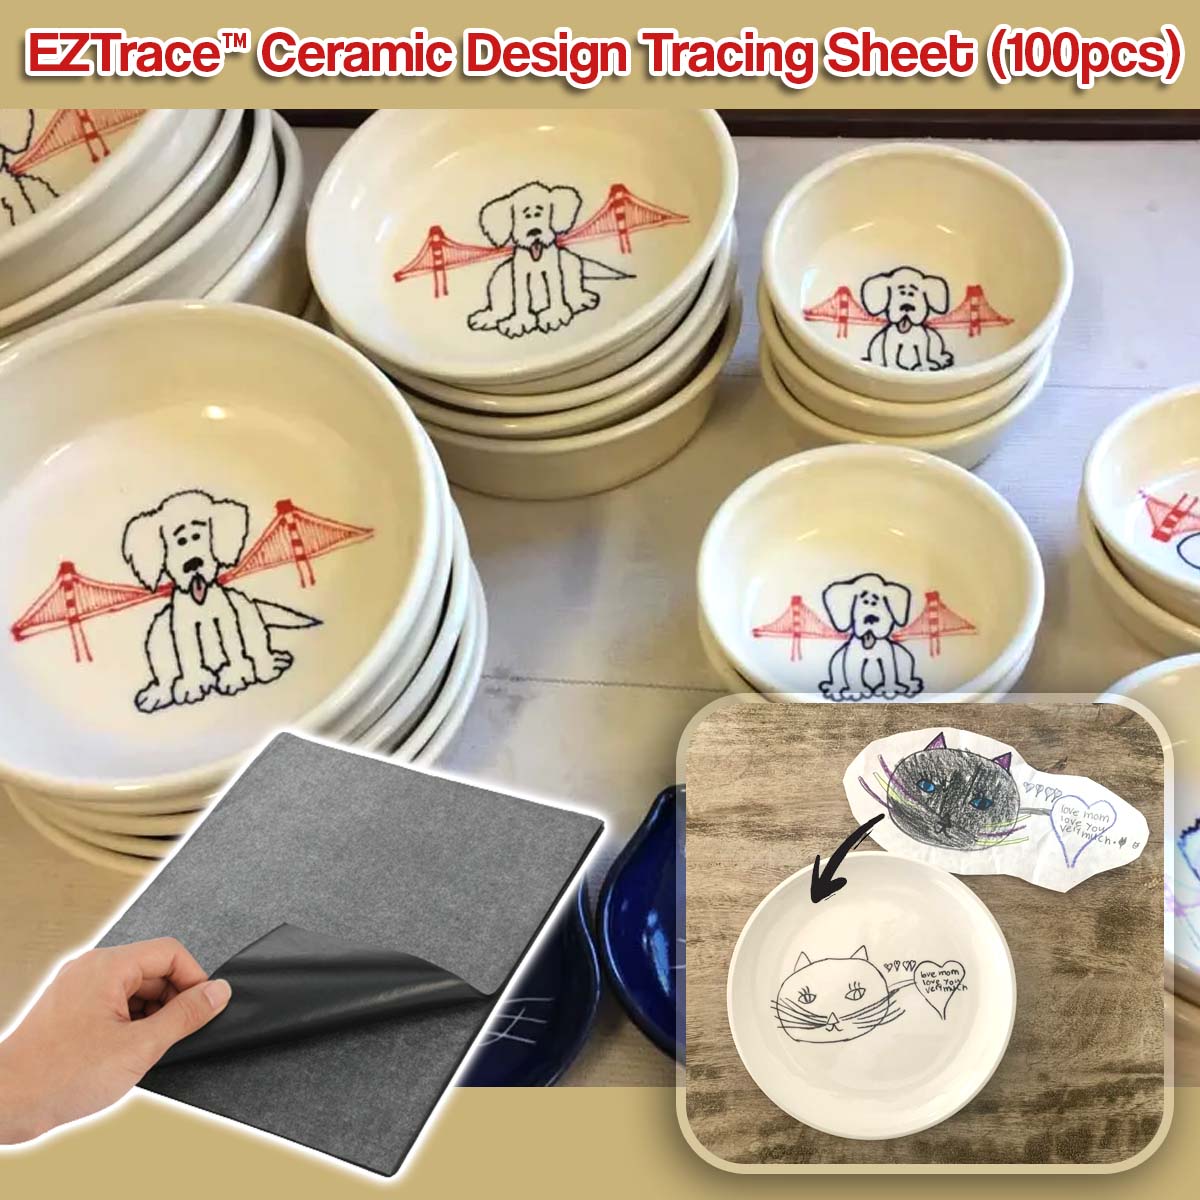 EZTrace™ Ceramic Design Tracing Sheet